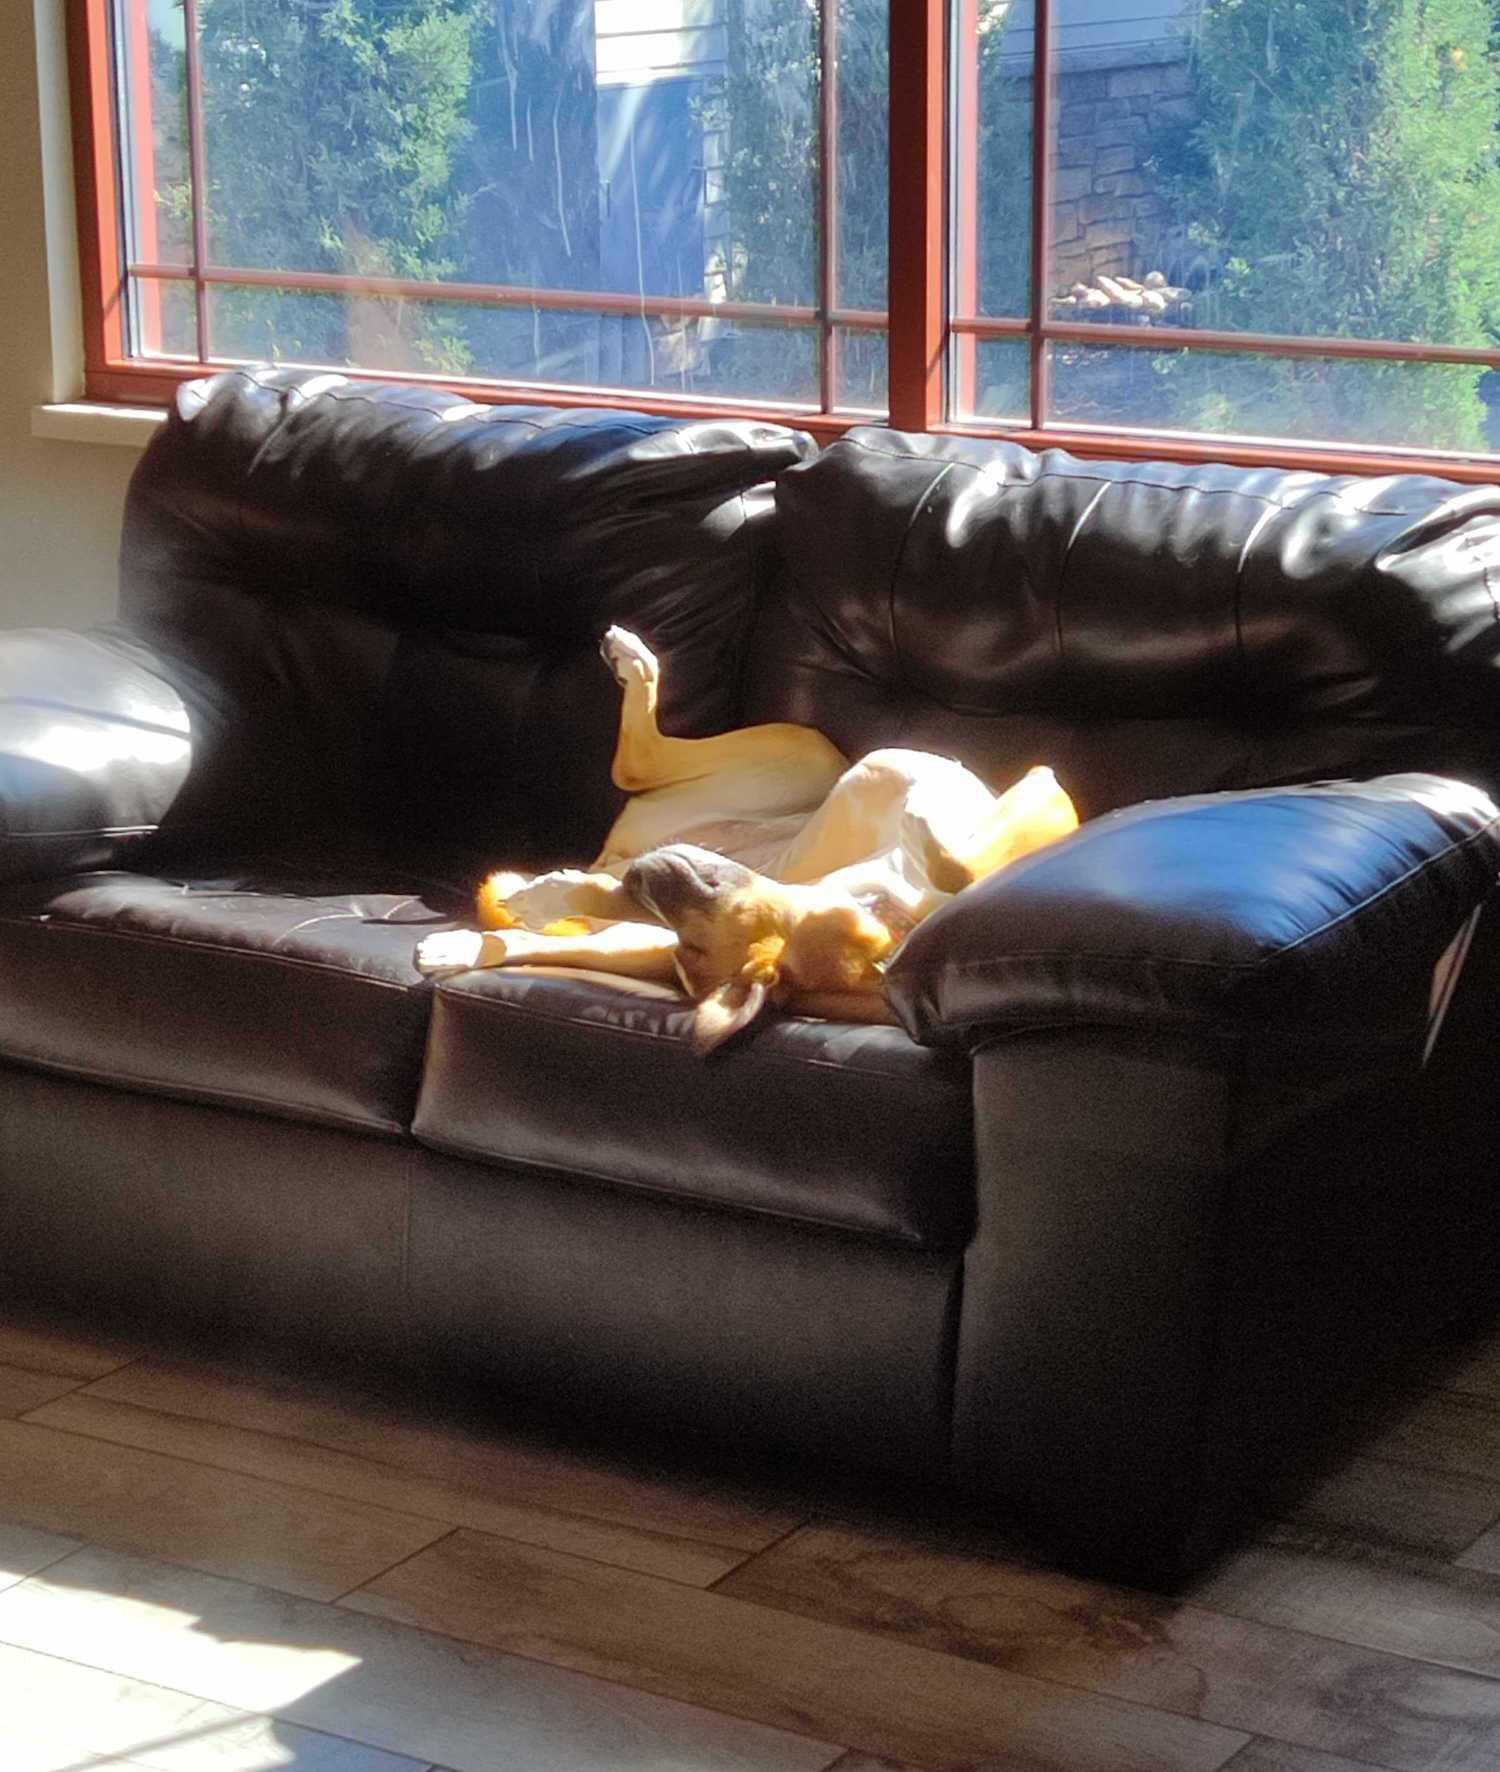 Dog asleep couch in senior center